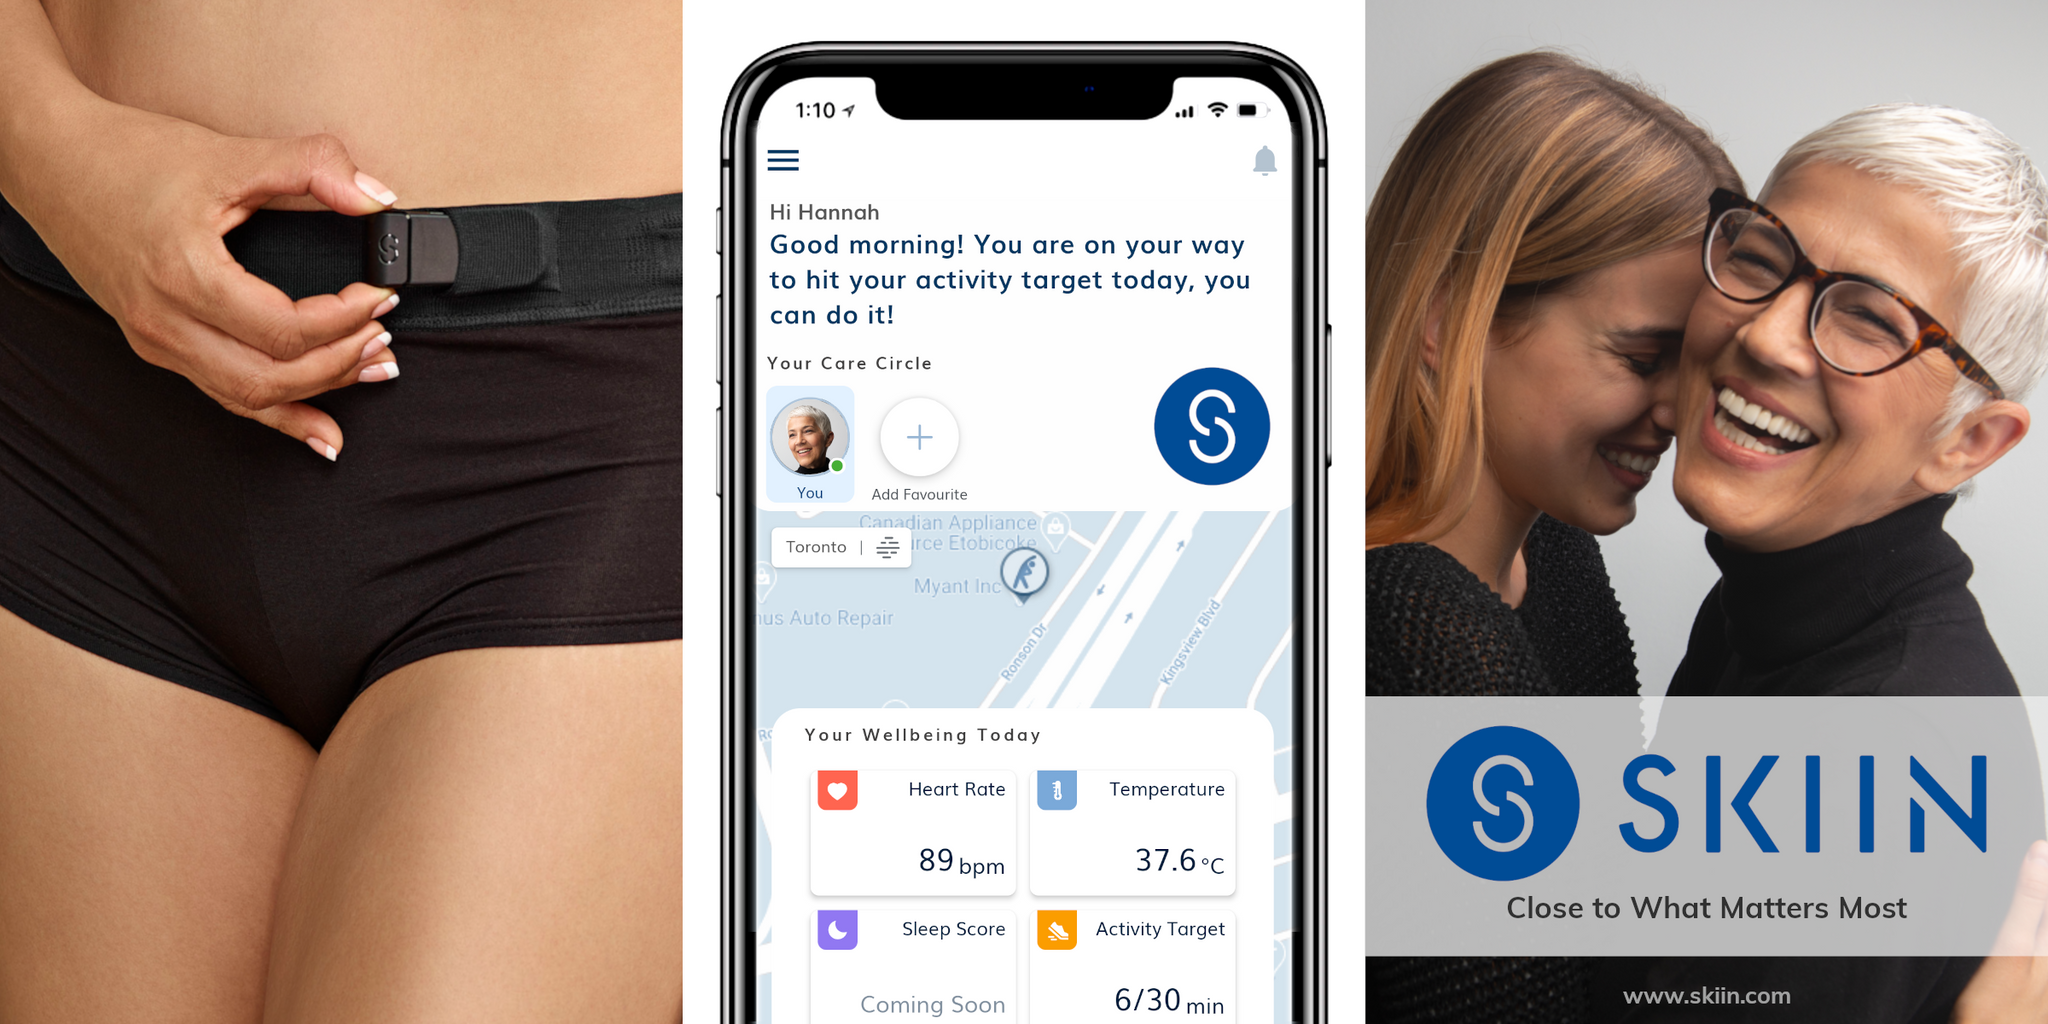 Skiin: Garment + App = Connected Care